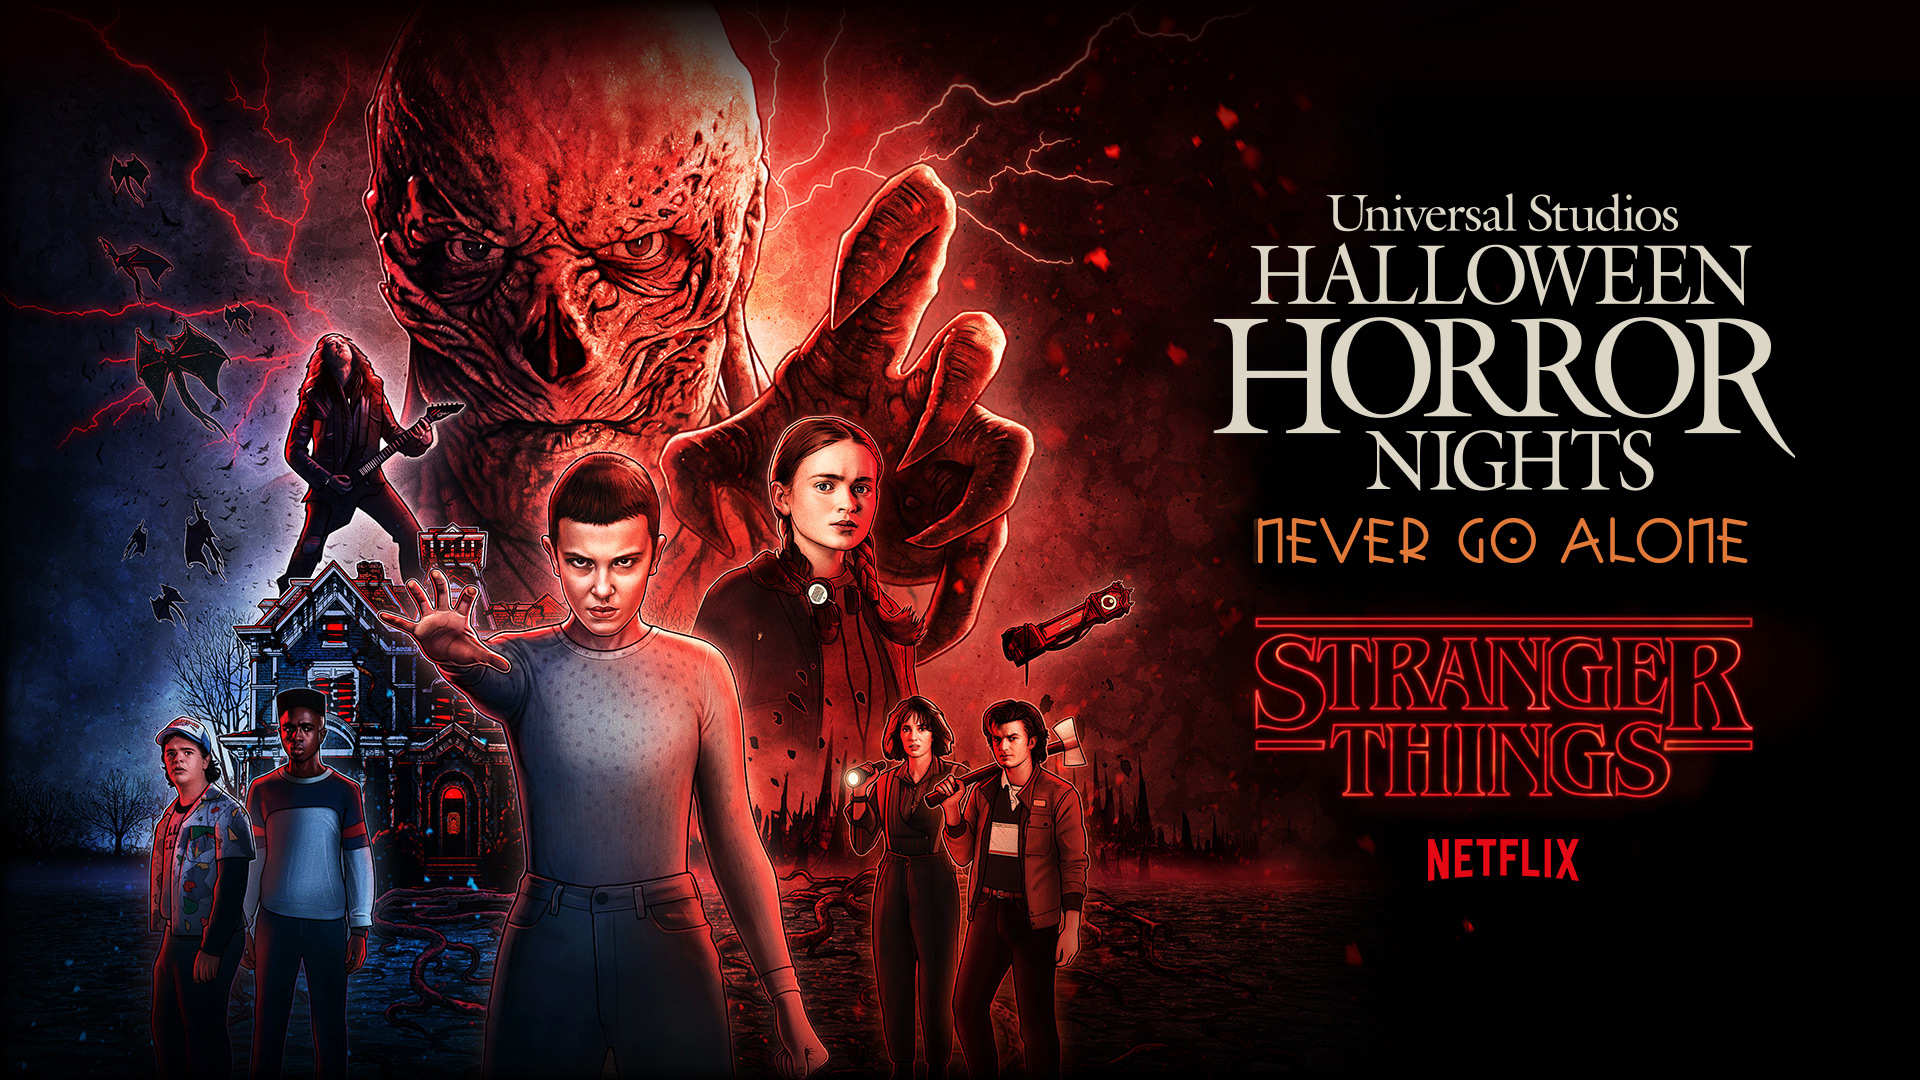 Stranger Things haunted house returns for Halloween Horror Nights 2023